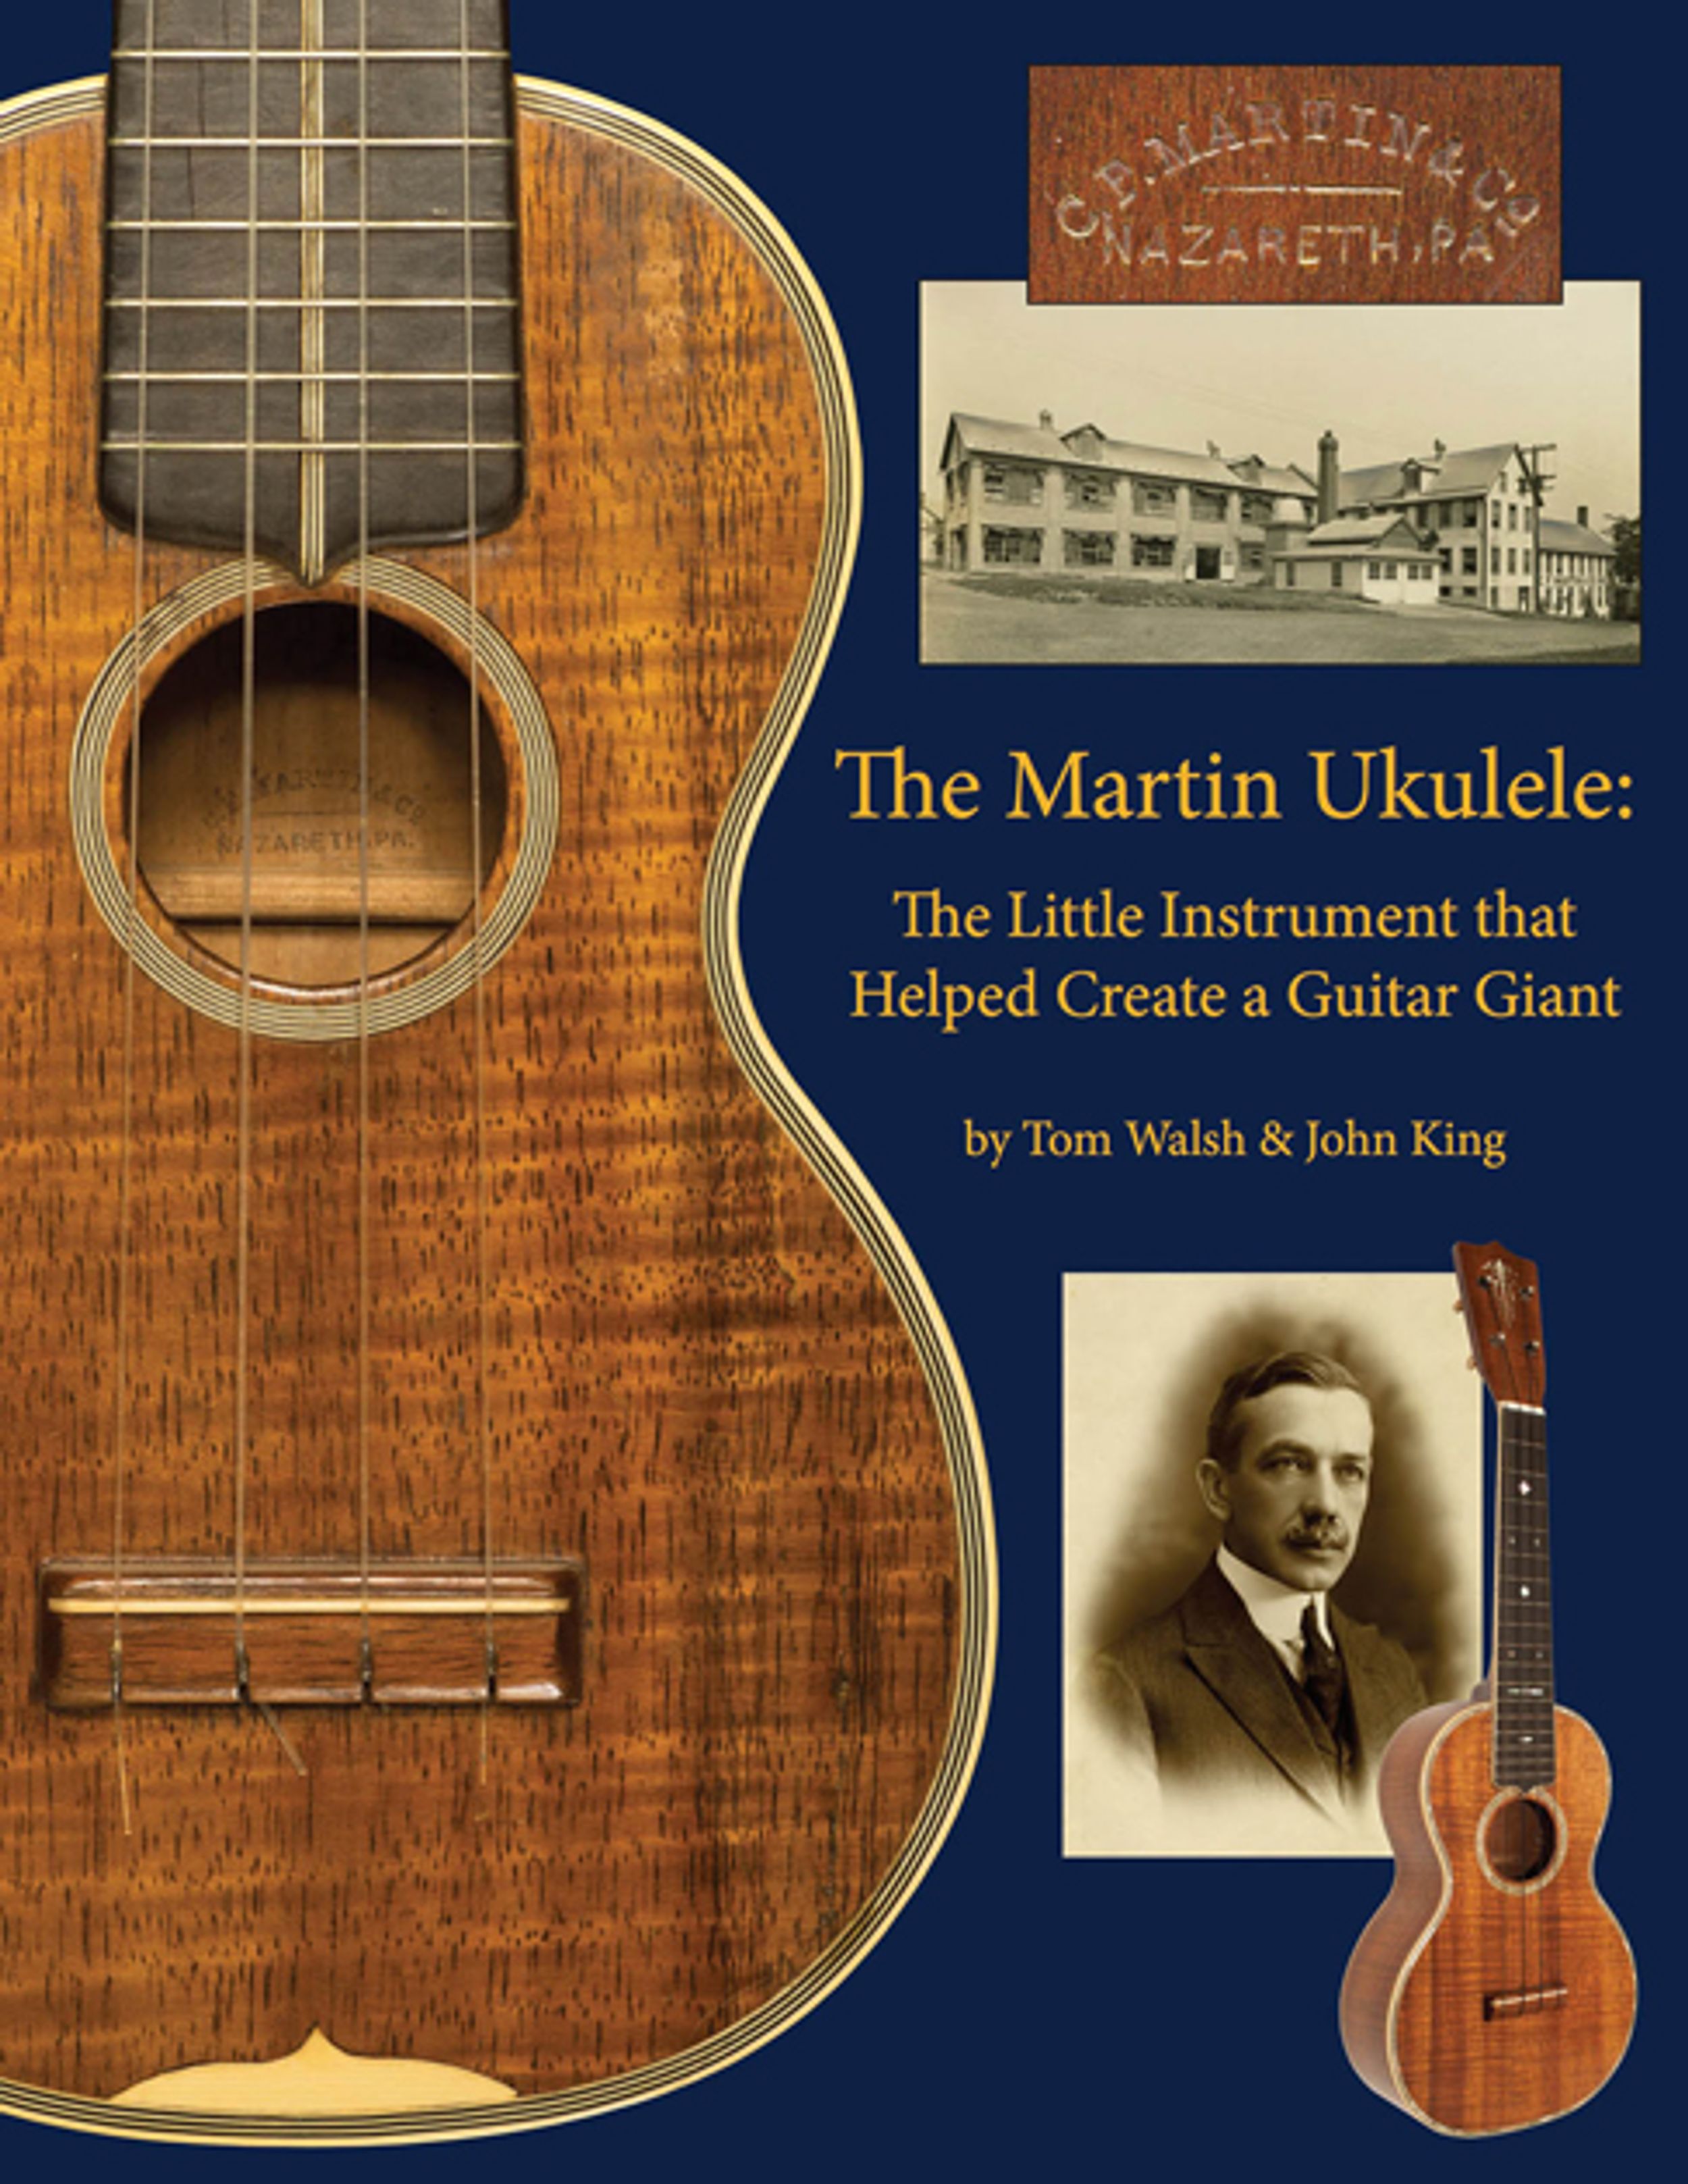 Hal Leonard Releases The Martin Ukulele Book